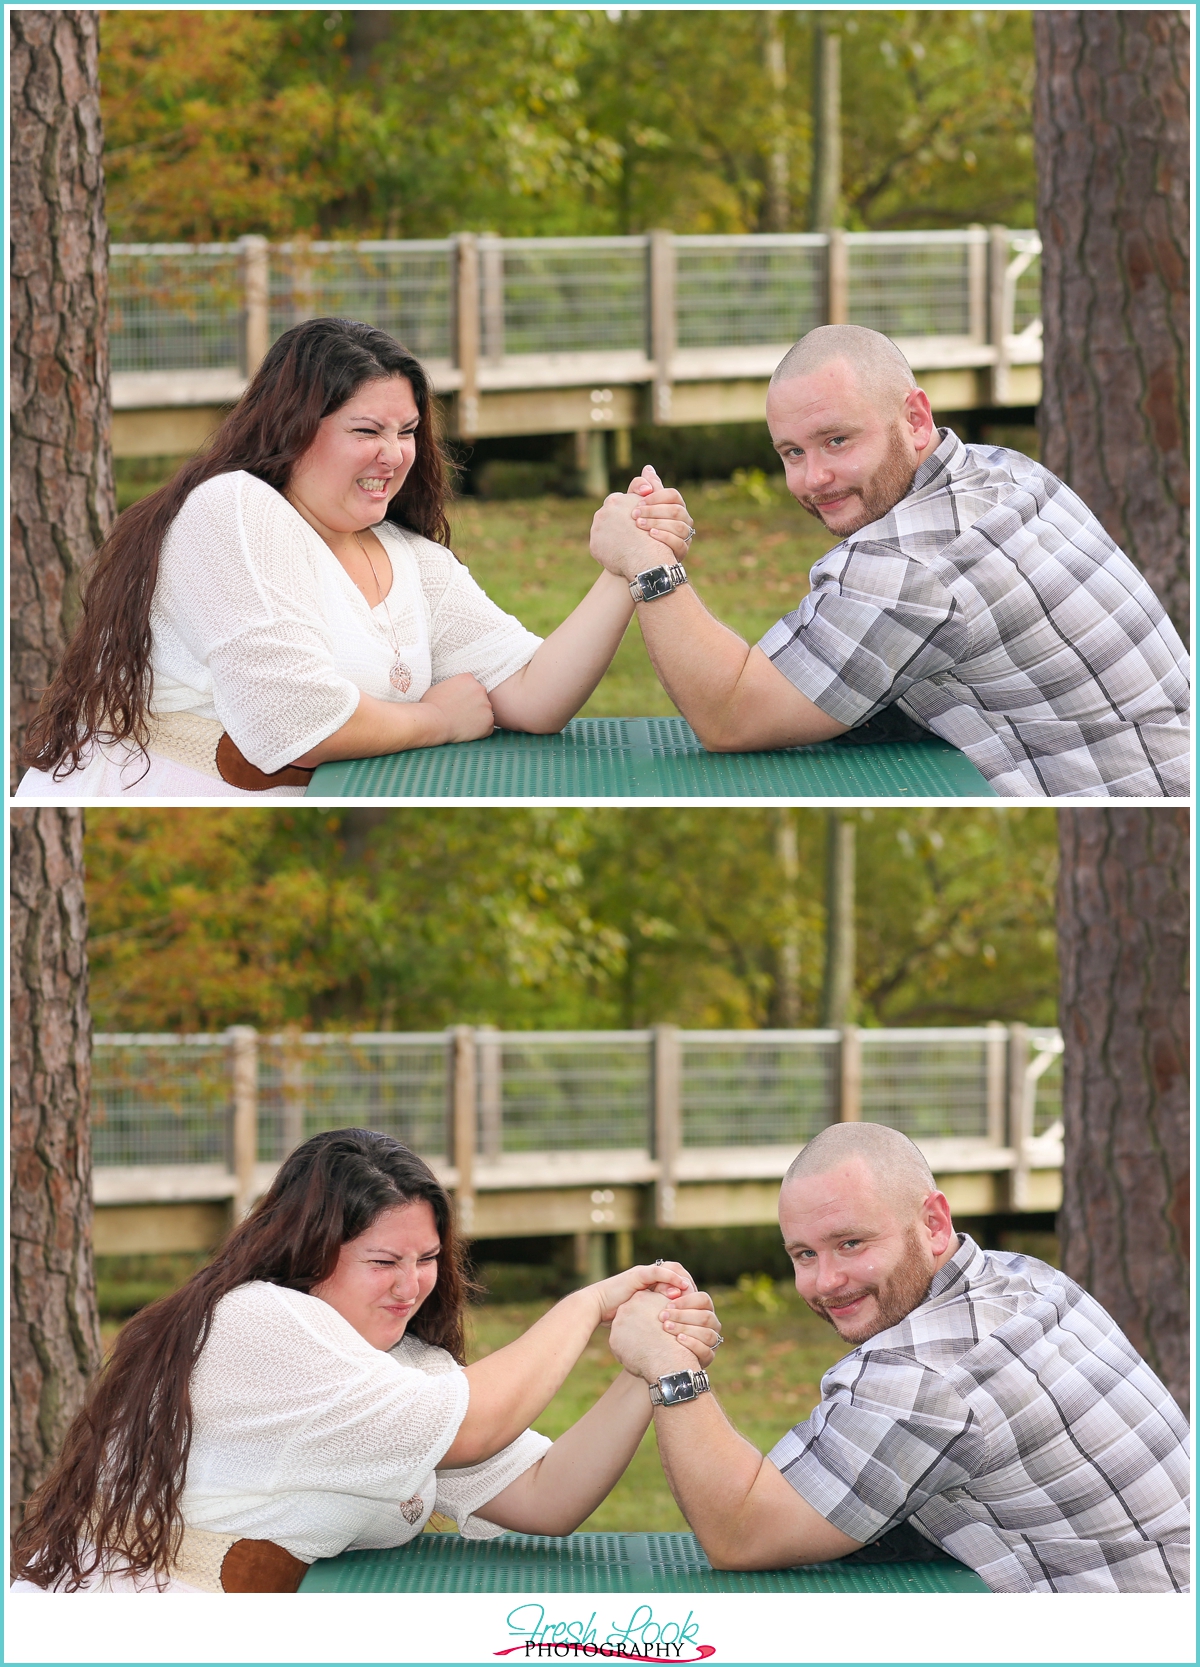 couple arm wrestling